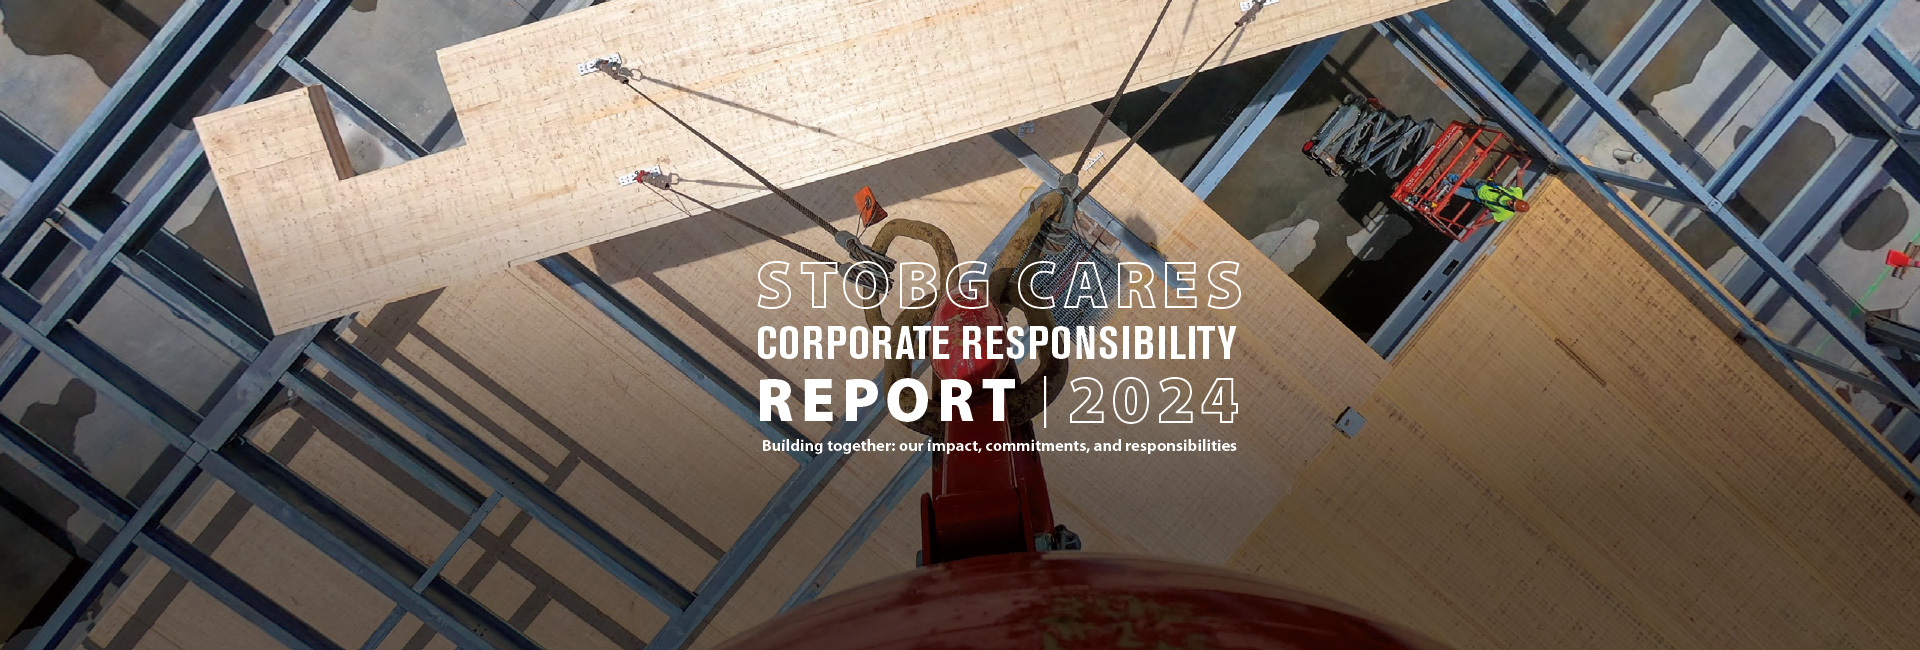 Corporate social responsibility report 2024